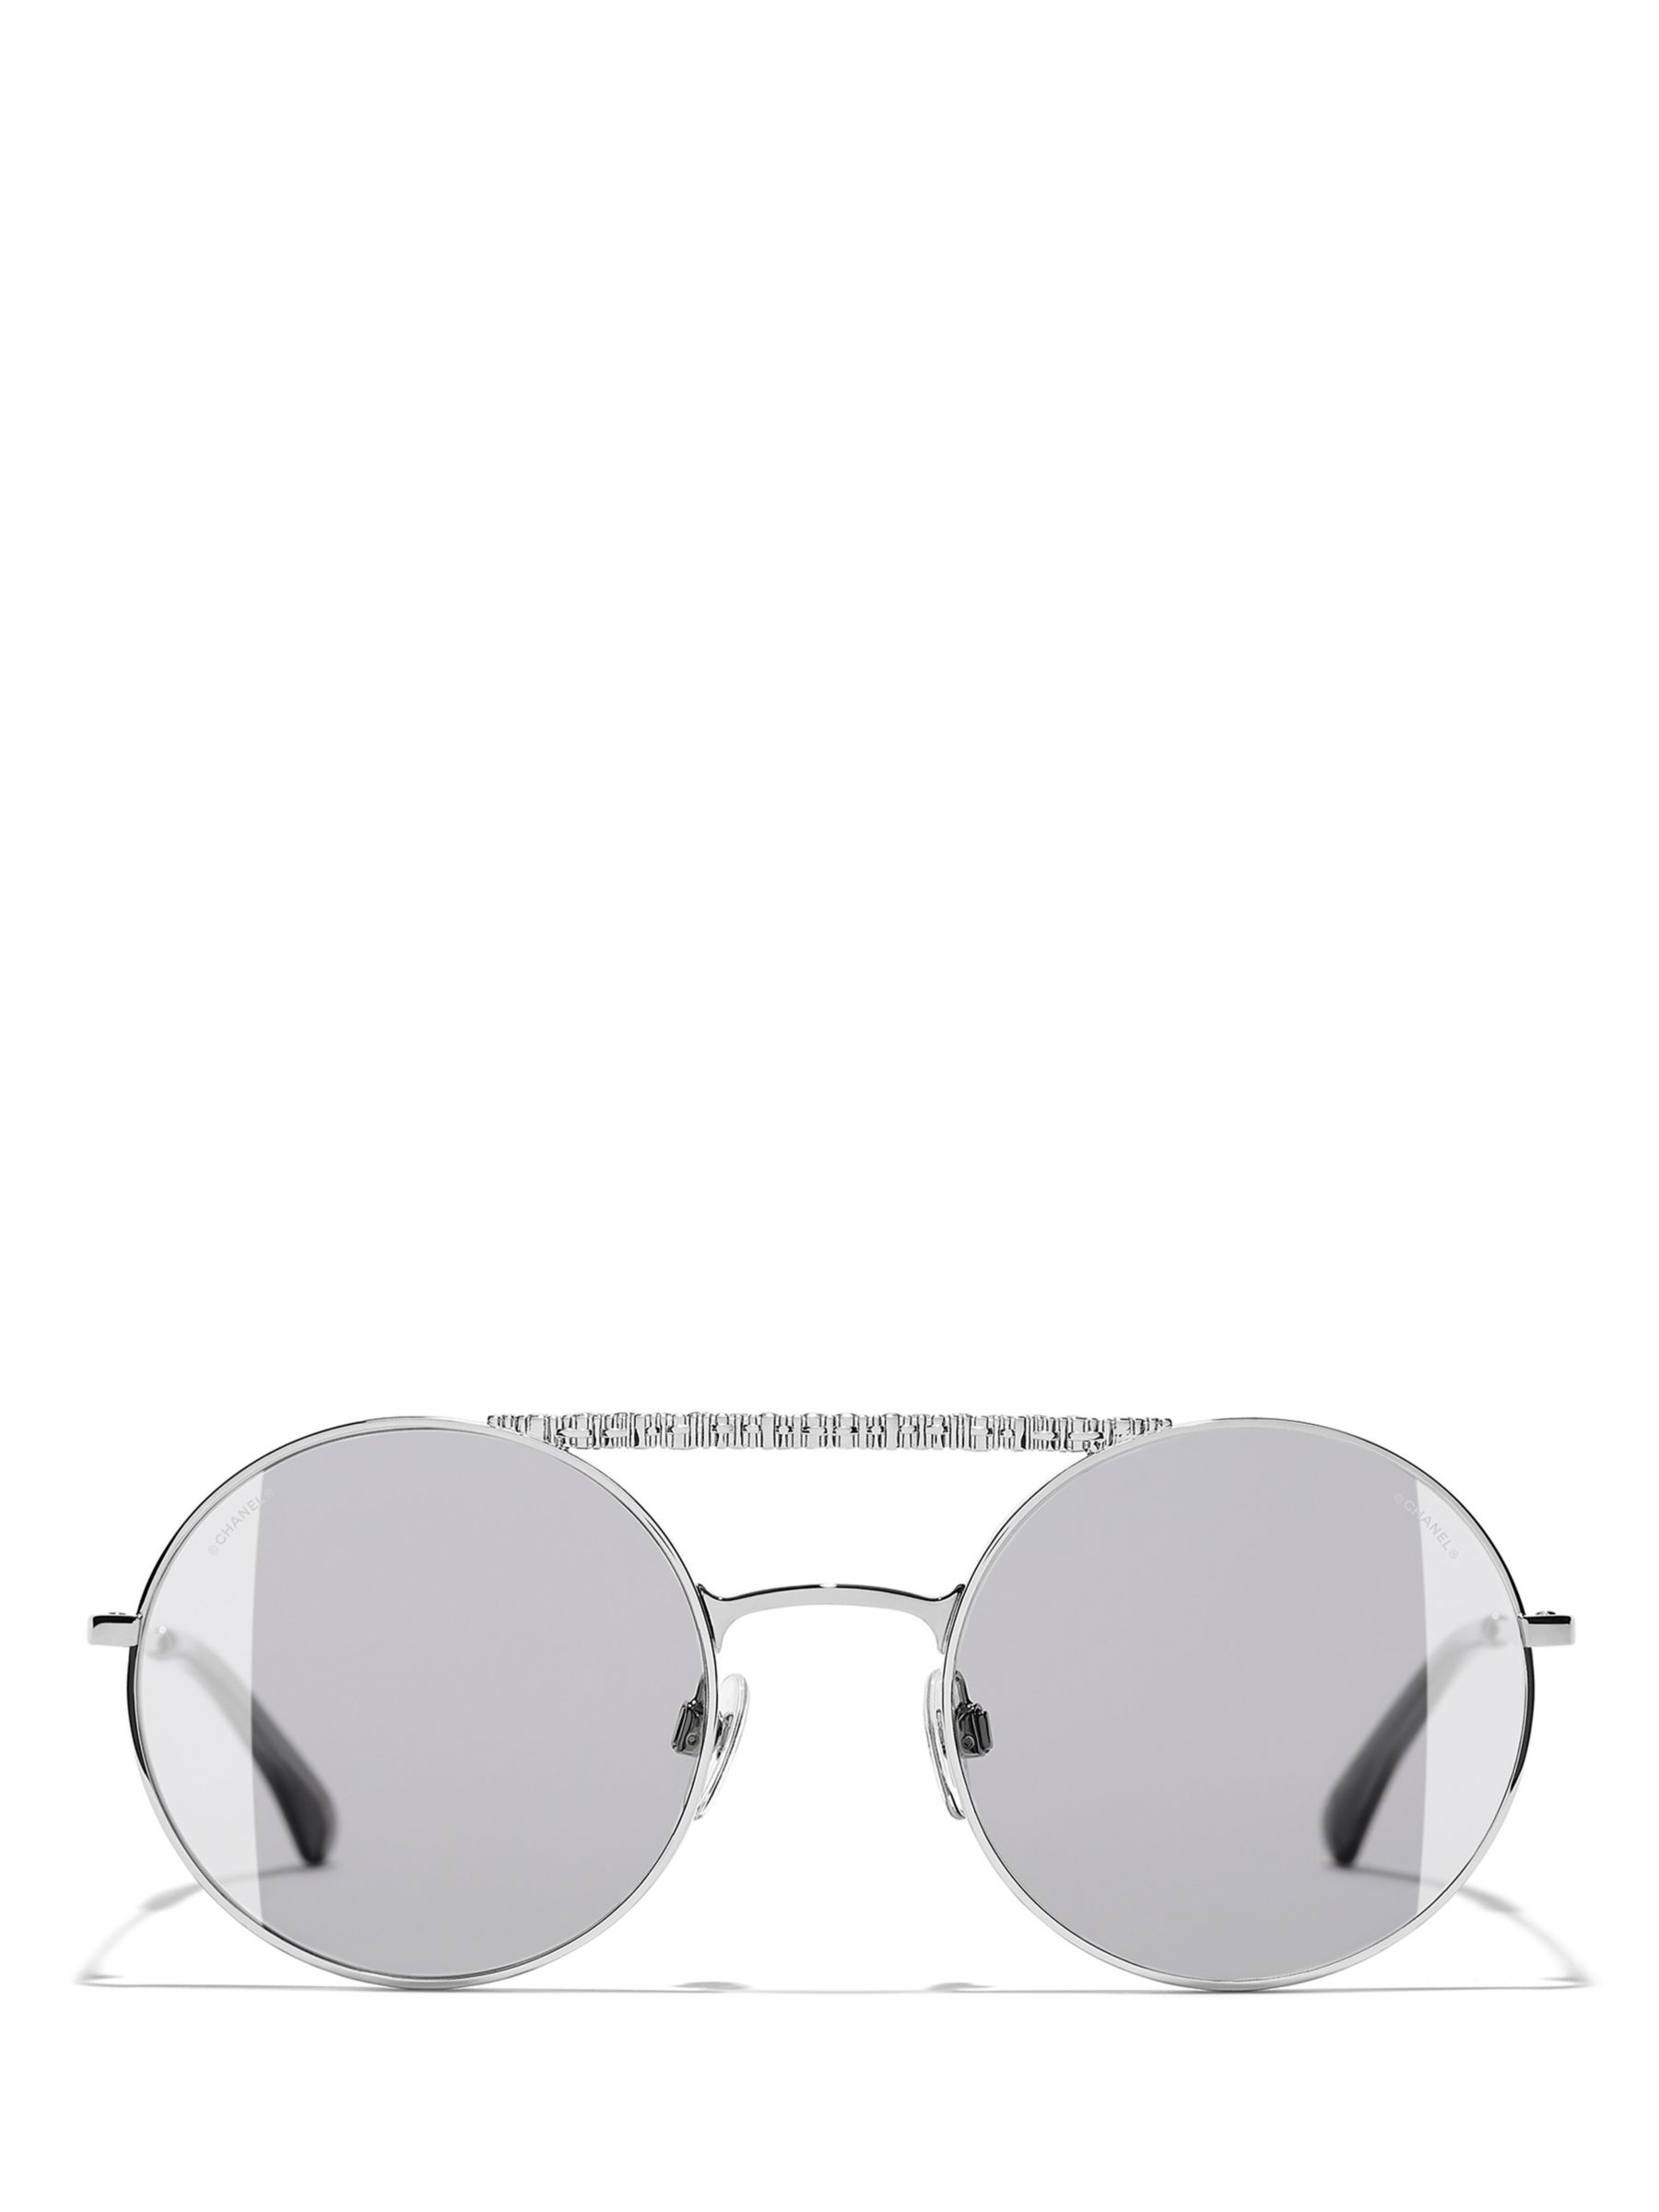 Sunglasses Chanel Grey in Metal - 23828651